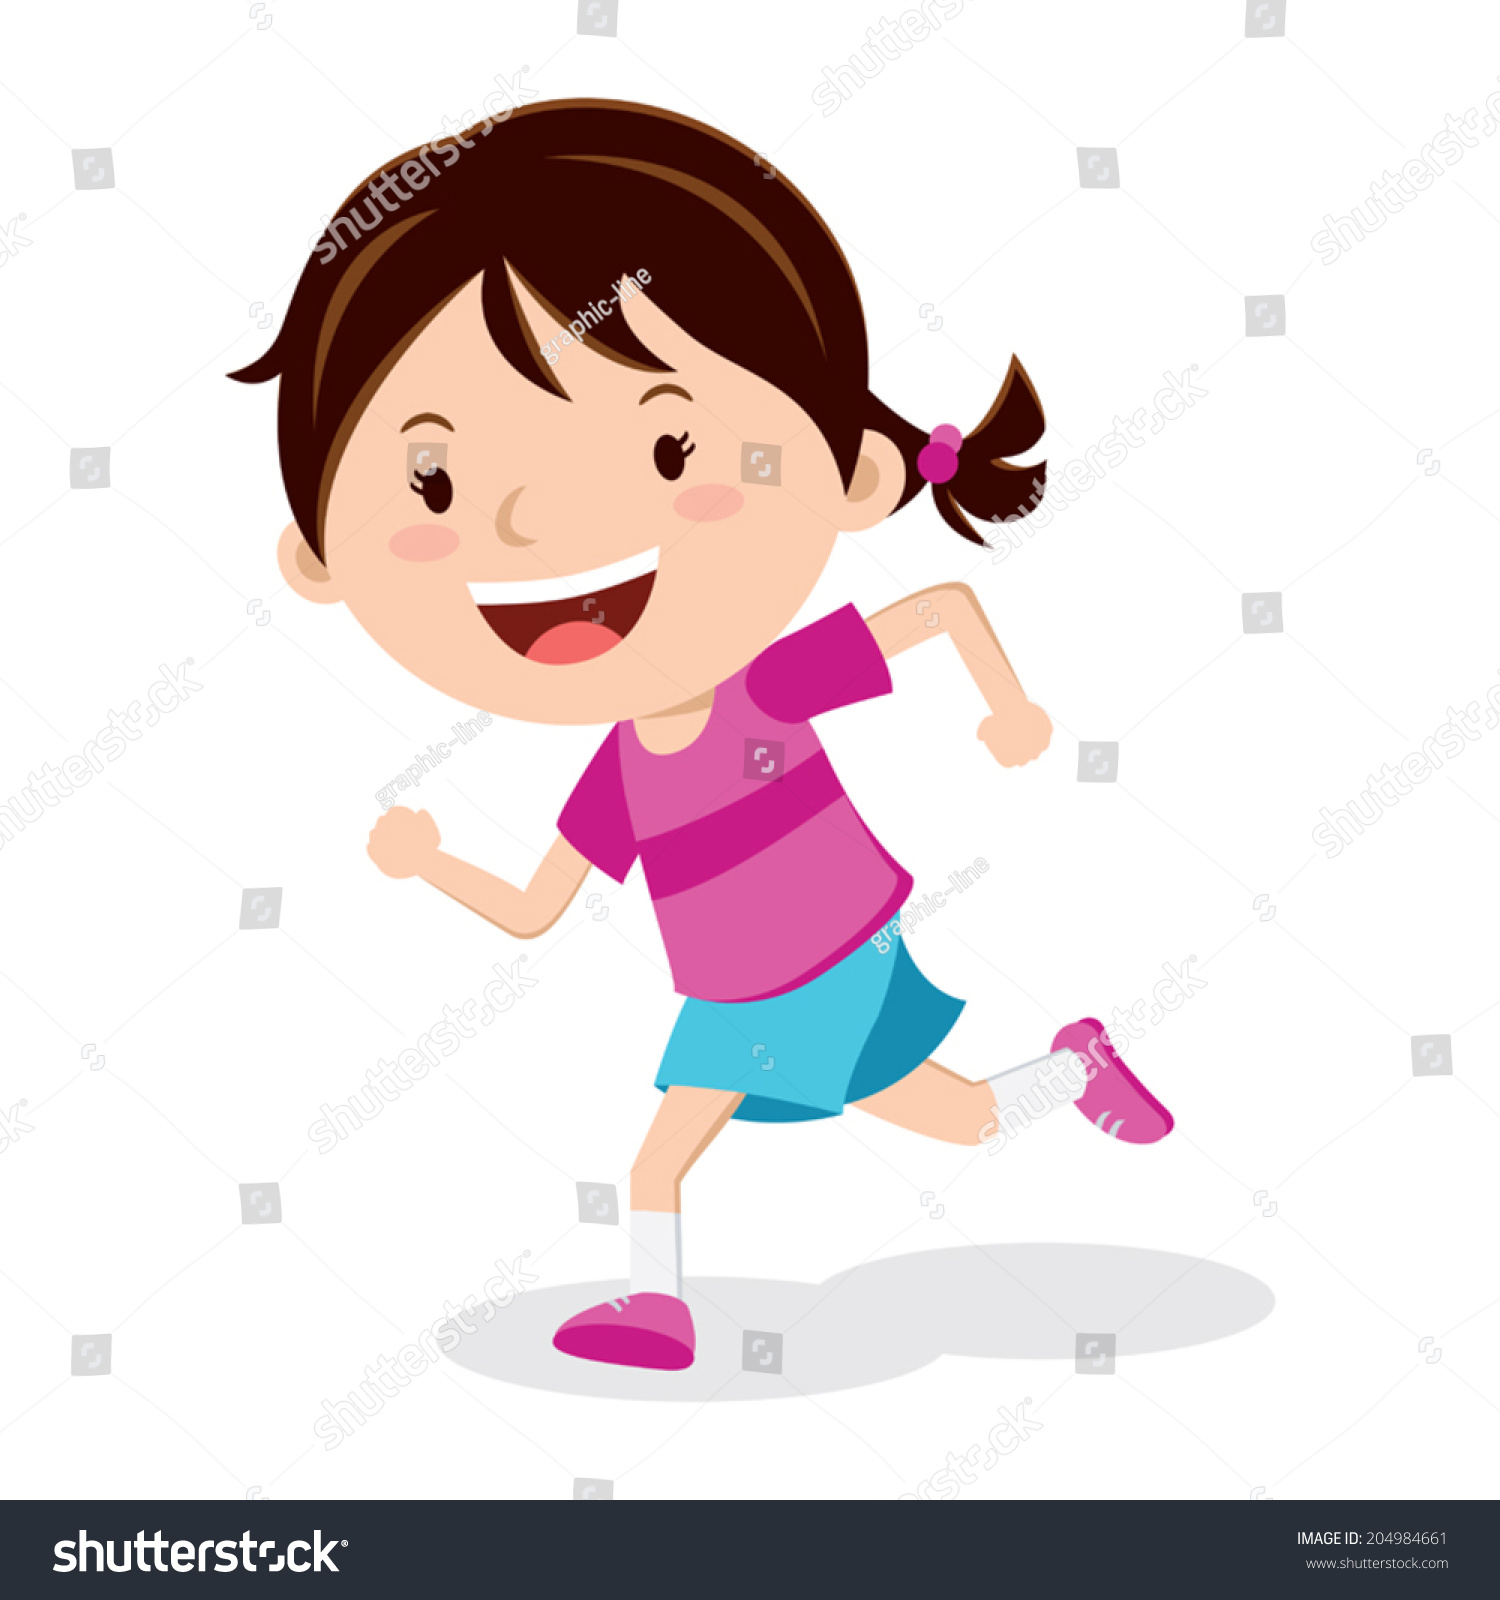 clipart girl running - photo #36